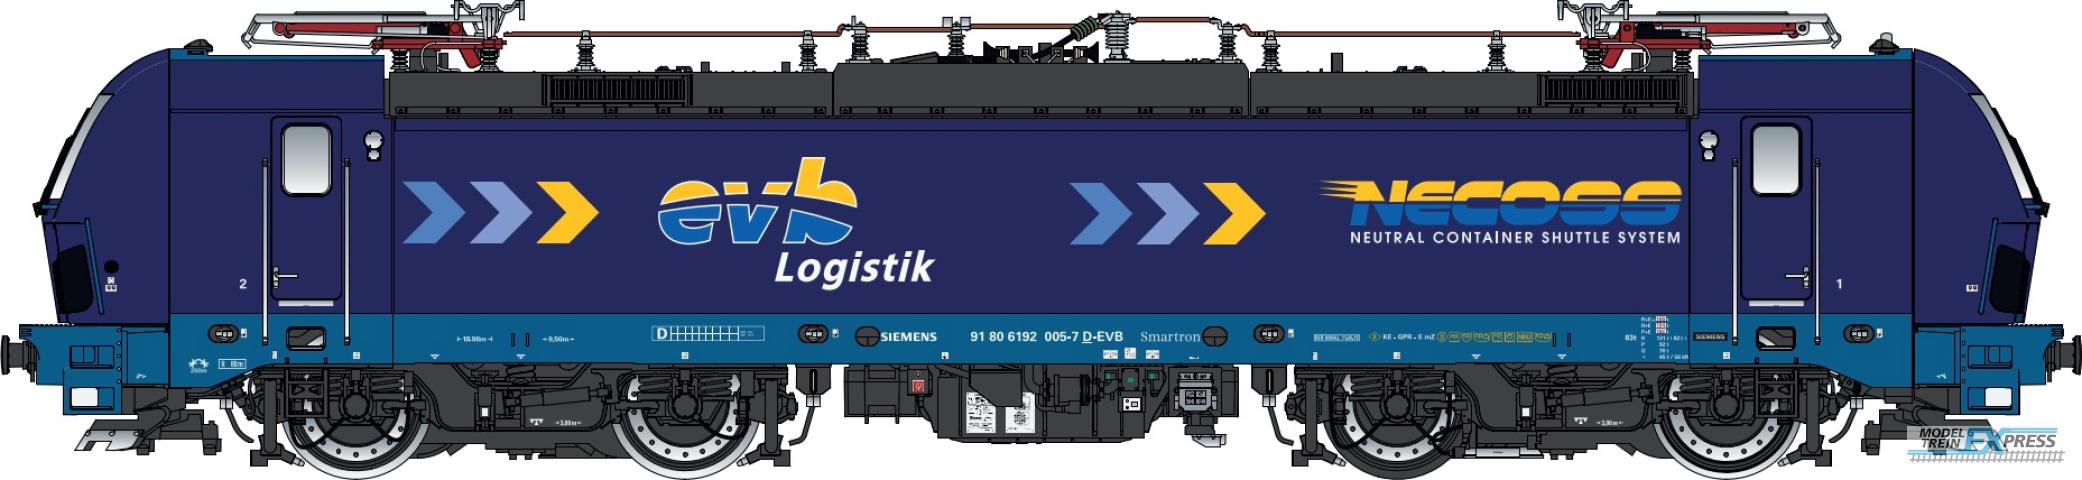 LS Models 16152 Smartron, Eisenbahnen und Verkehrsbetriebe Elbe-Weser (EVB Logistik)  /  Ep. VI  /  ---  /  HO  /  DC  /  1 P.